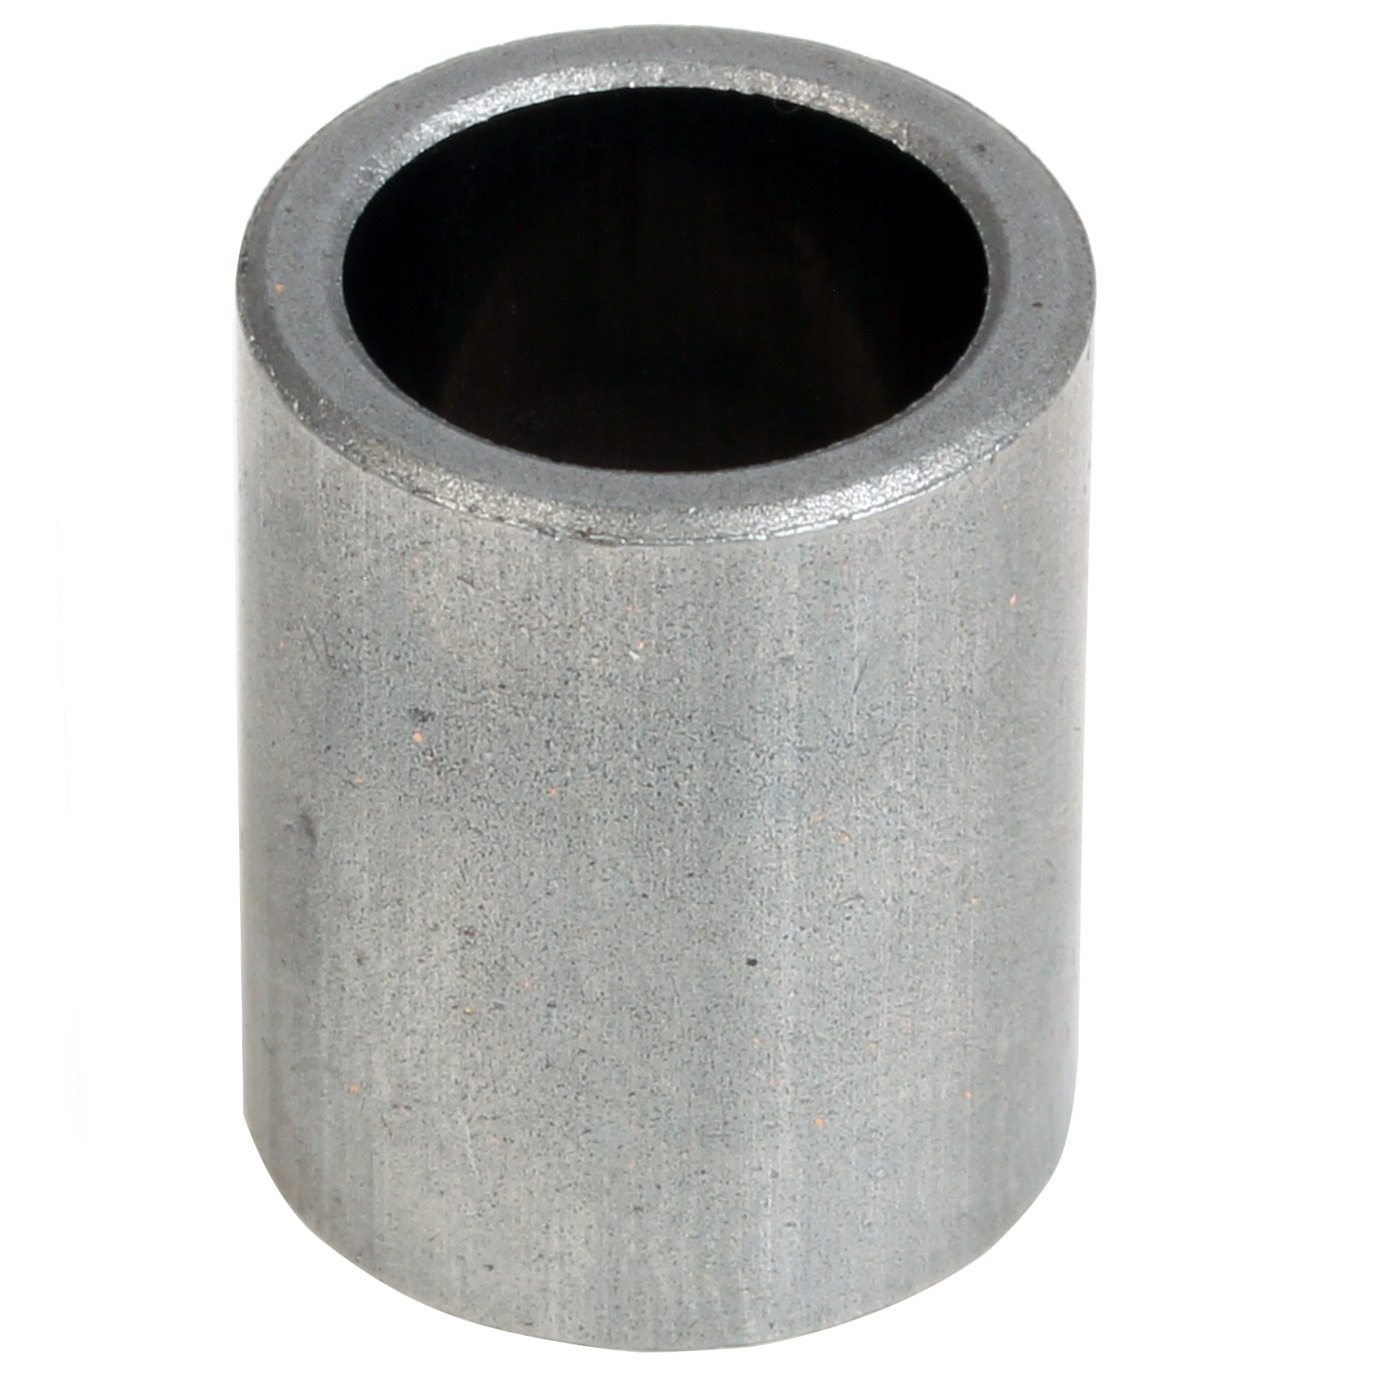 Cylindrical sintered ferrous bush - Self-lubricating FP20 ferrous alloy METAFRAM - From 3 to 100mm - Cylindrical